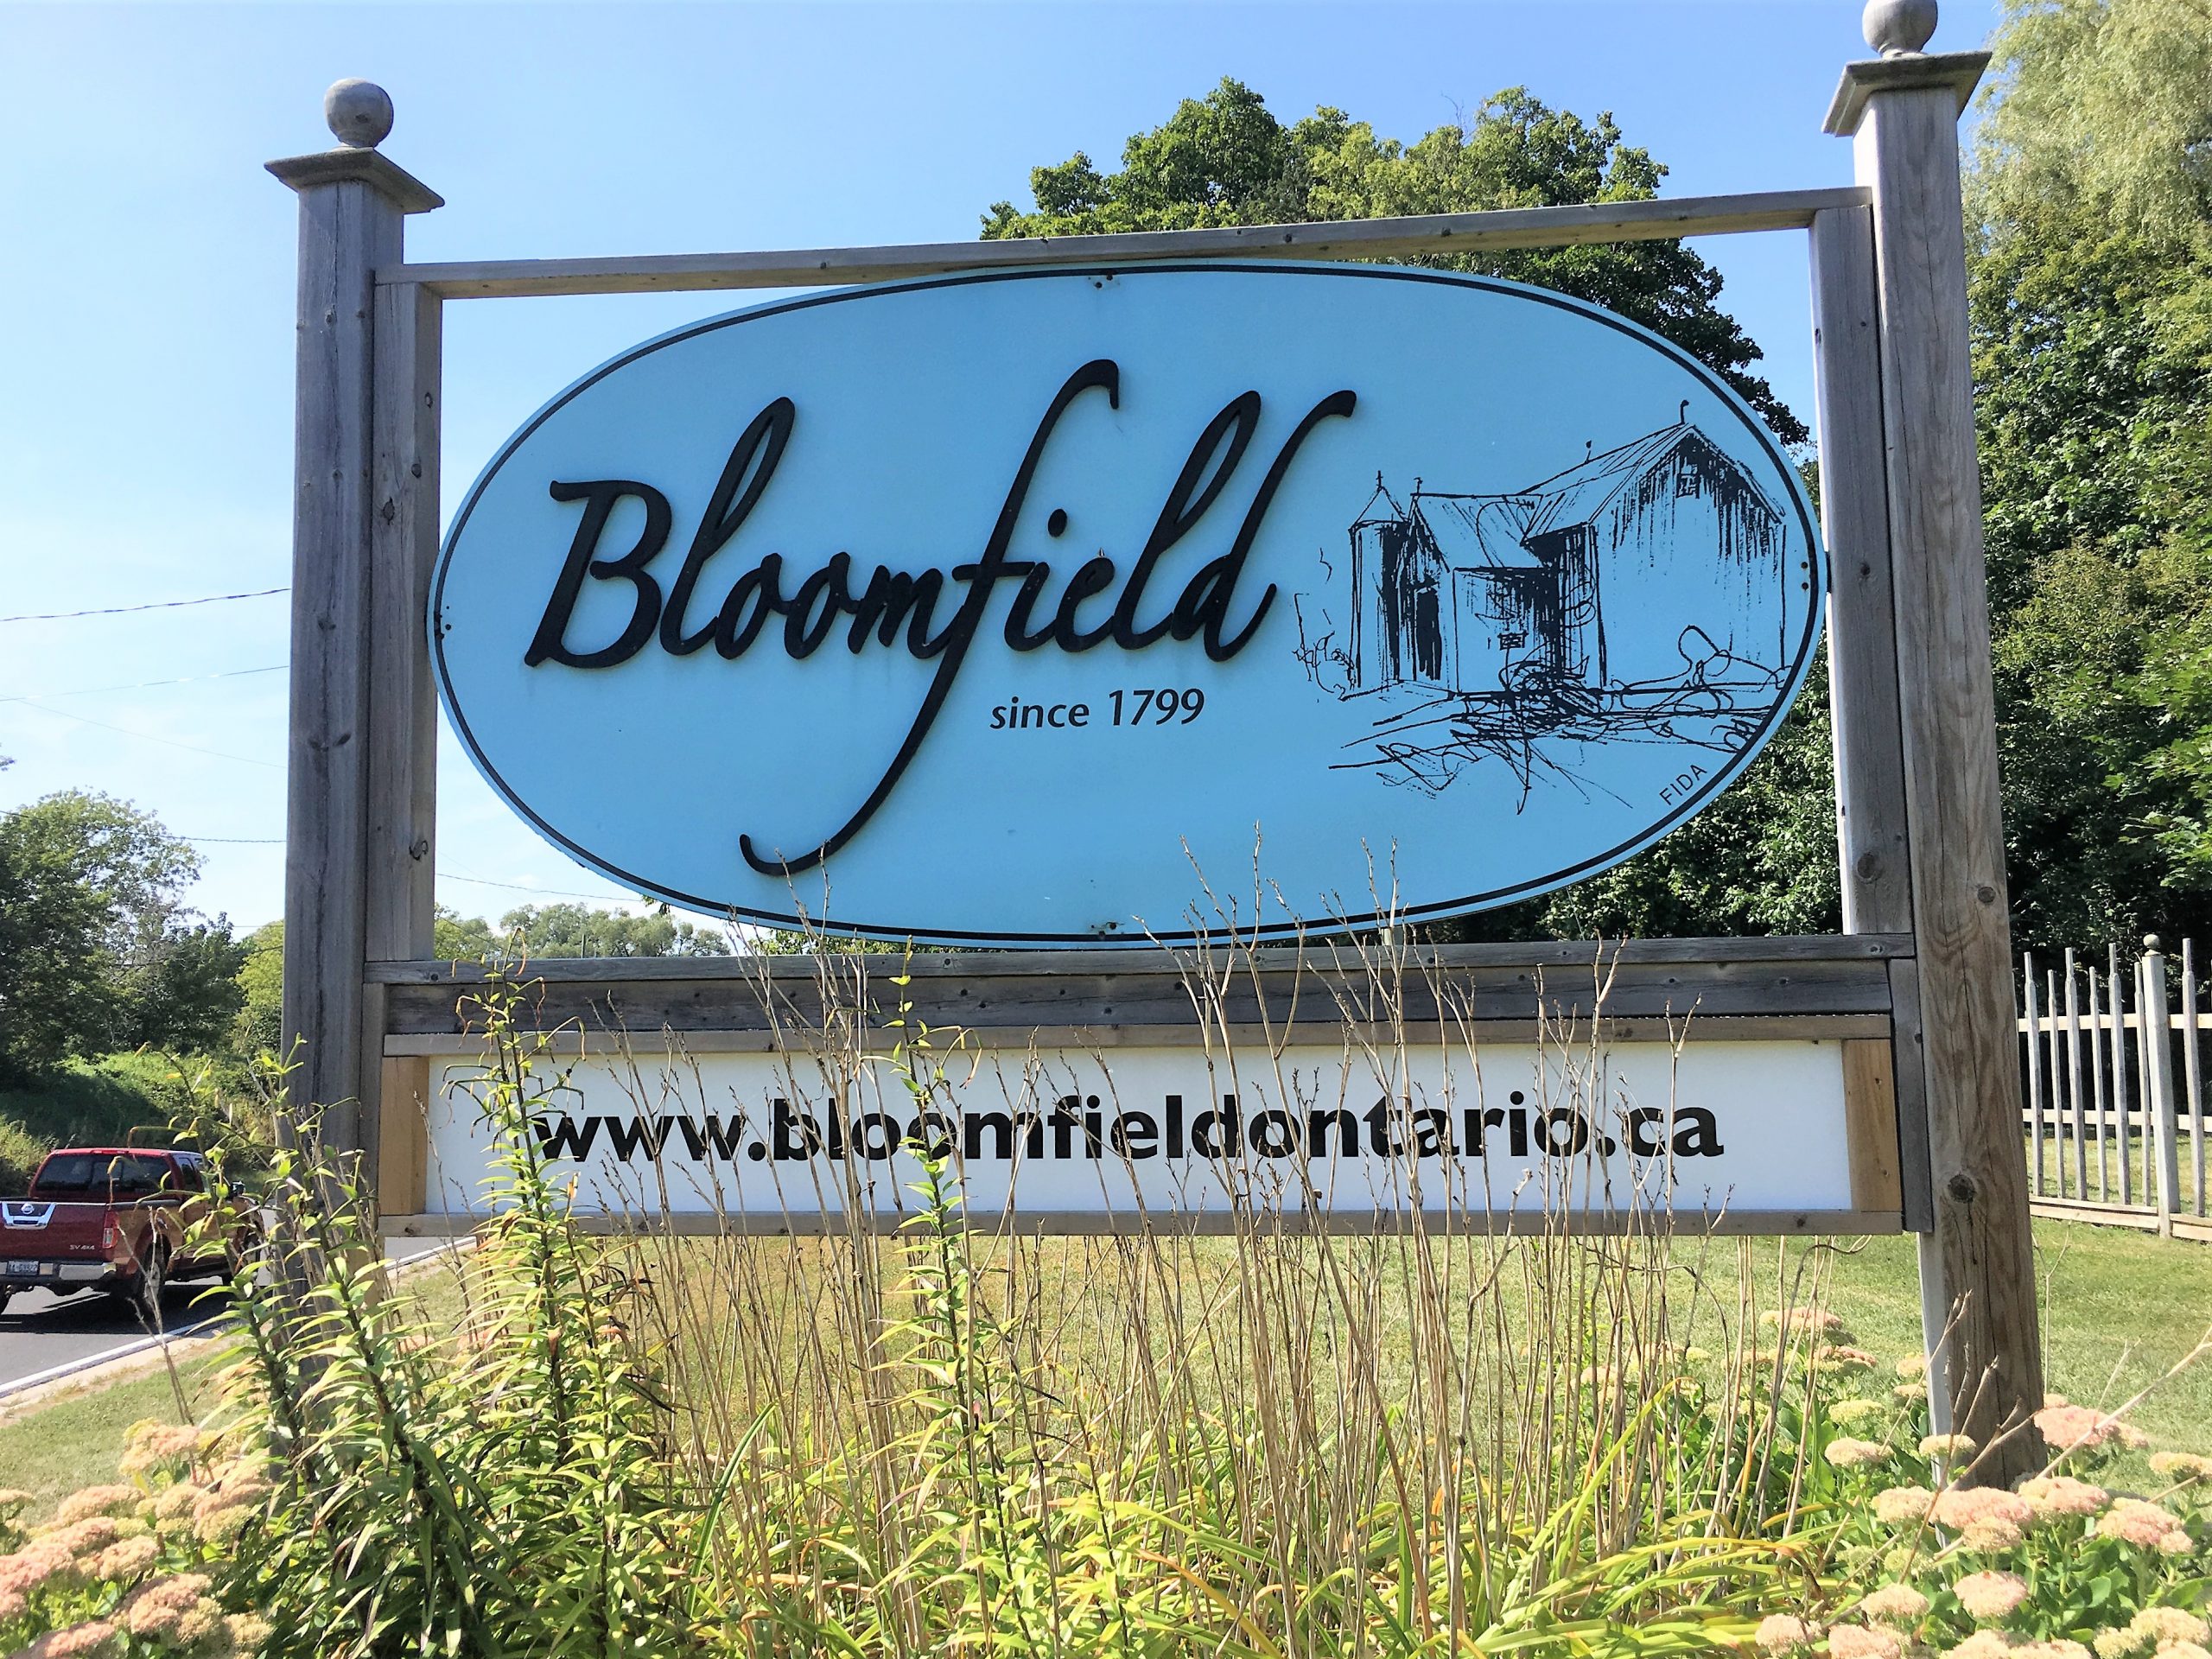 Bloomfield, Prince Edward County